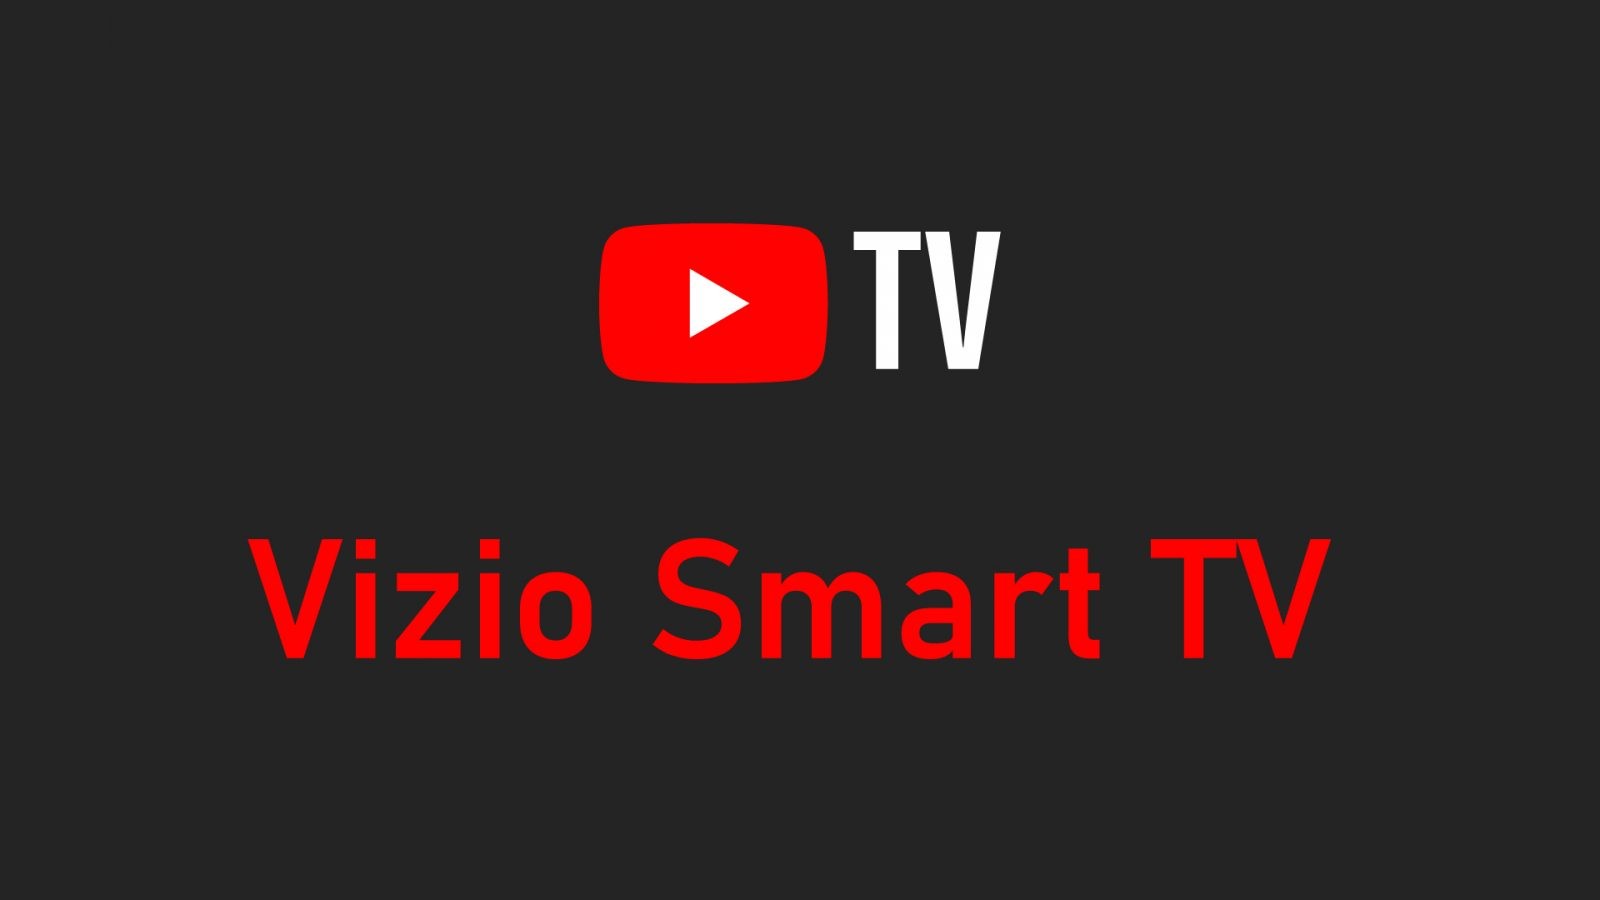 Can i watch youtube tv on my vizio smart tv How To Watch Youtube Tv On Vizio Smart Tv Techowns